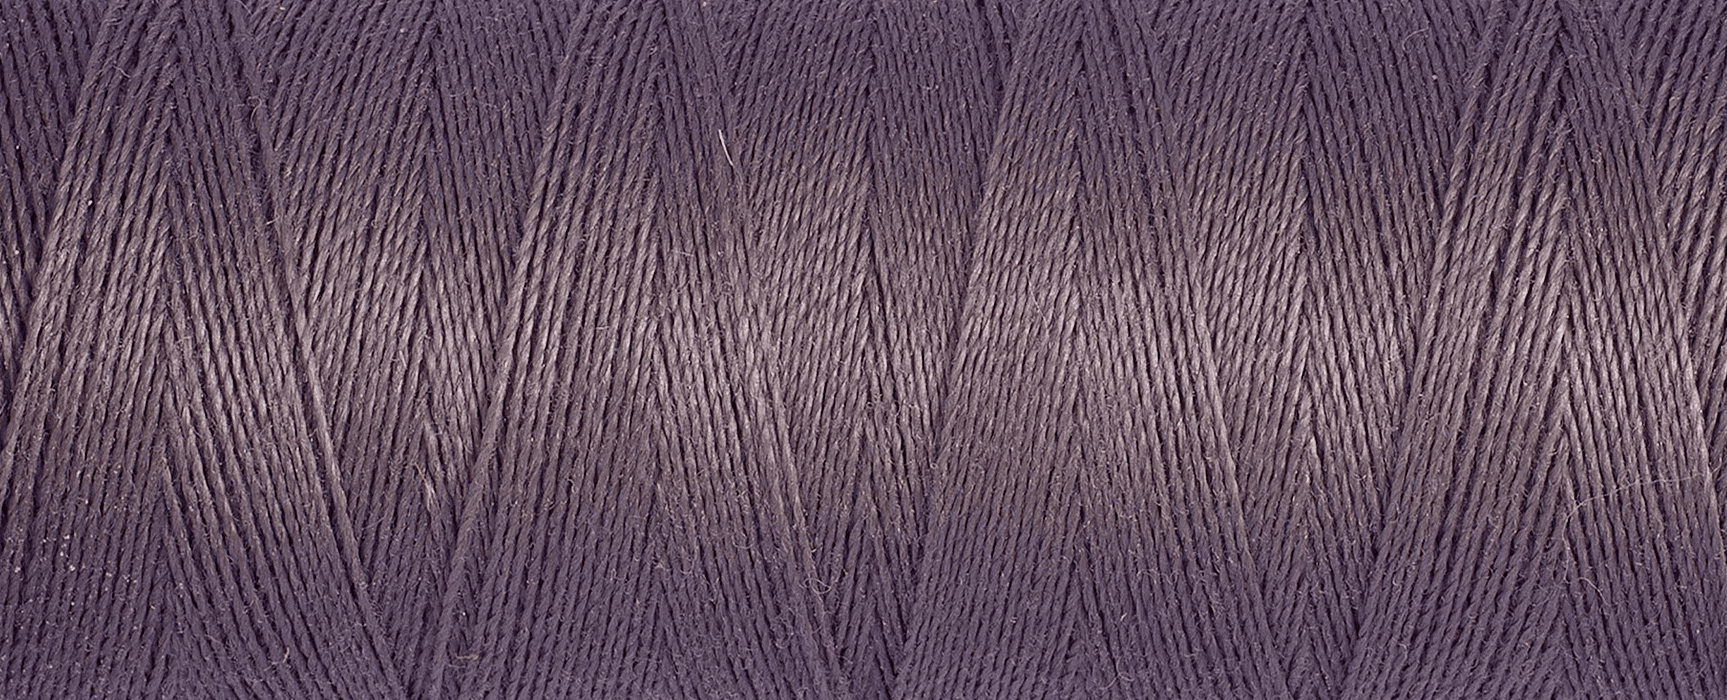 Gutermann Sew-All Thread - 100M (127)-Thread-Jelly Fabrics